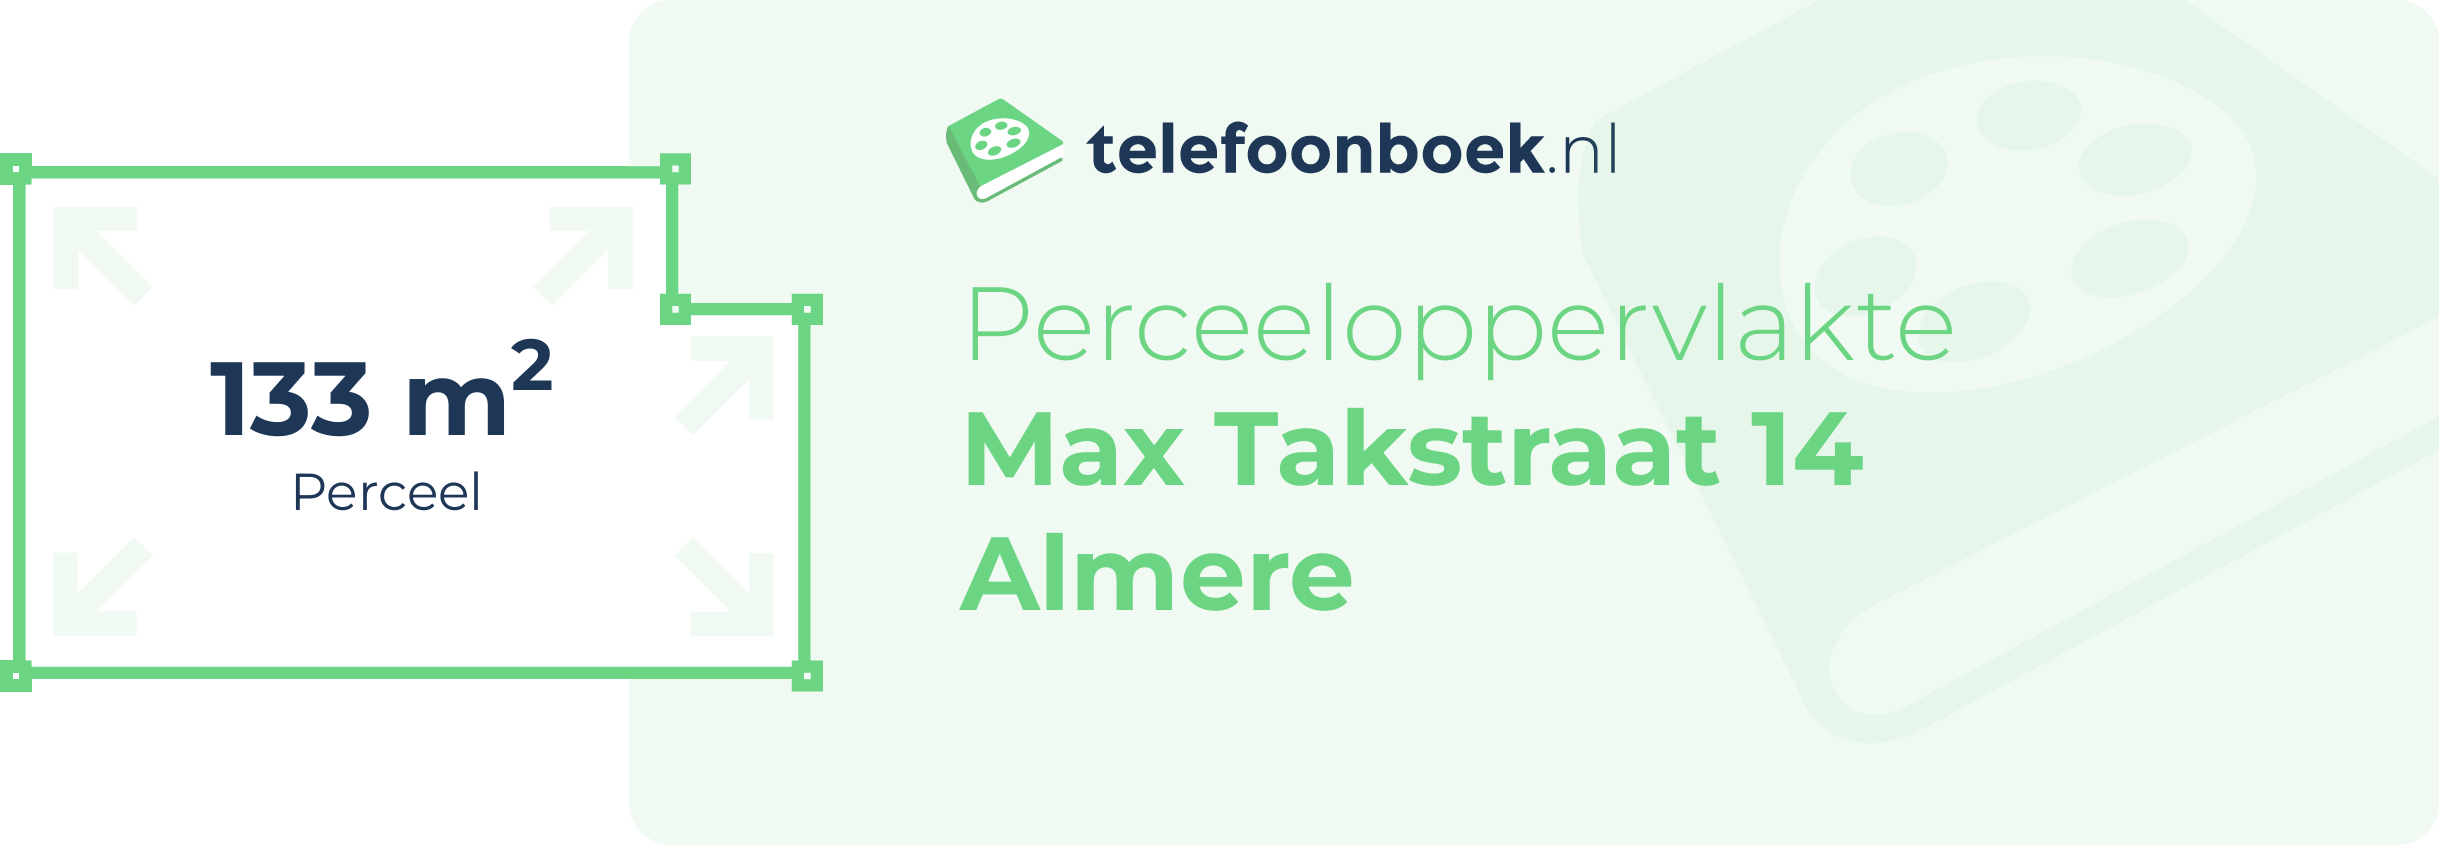 Perceeloppervlakte Max Takstraat 14 Almere